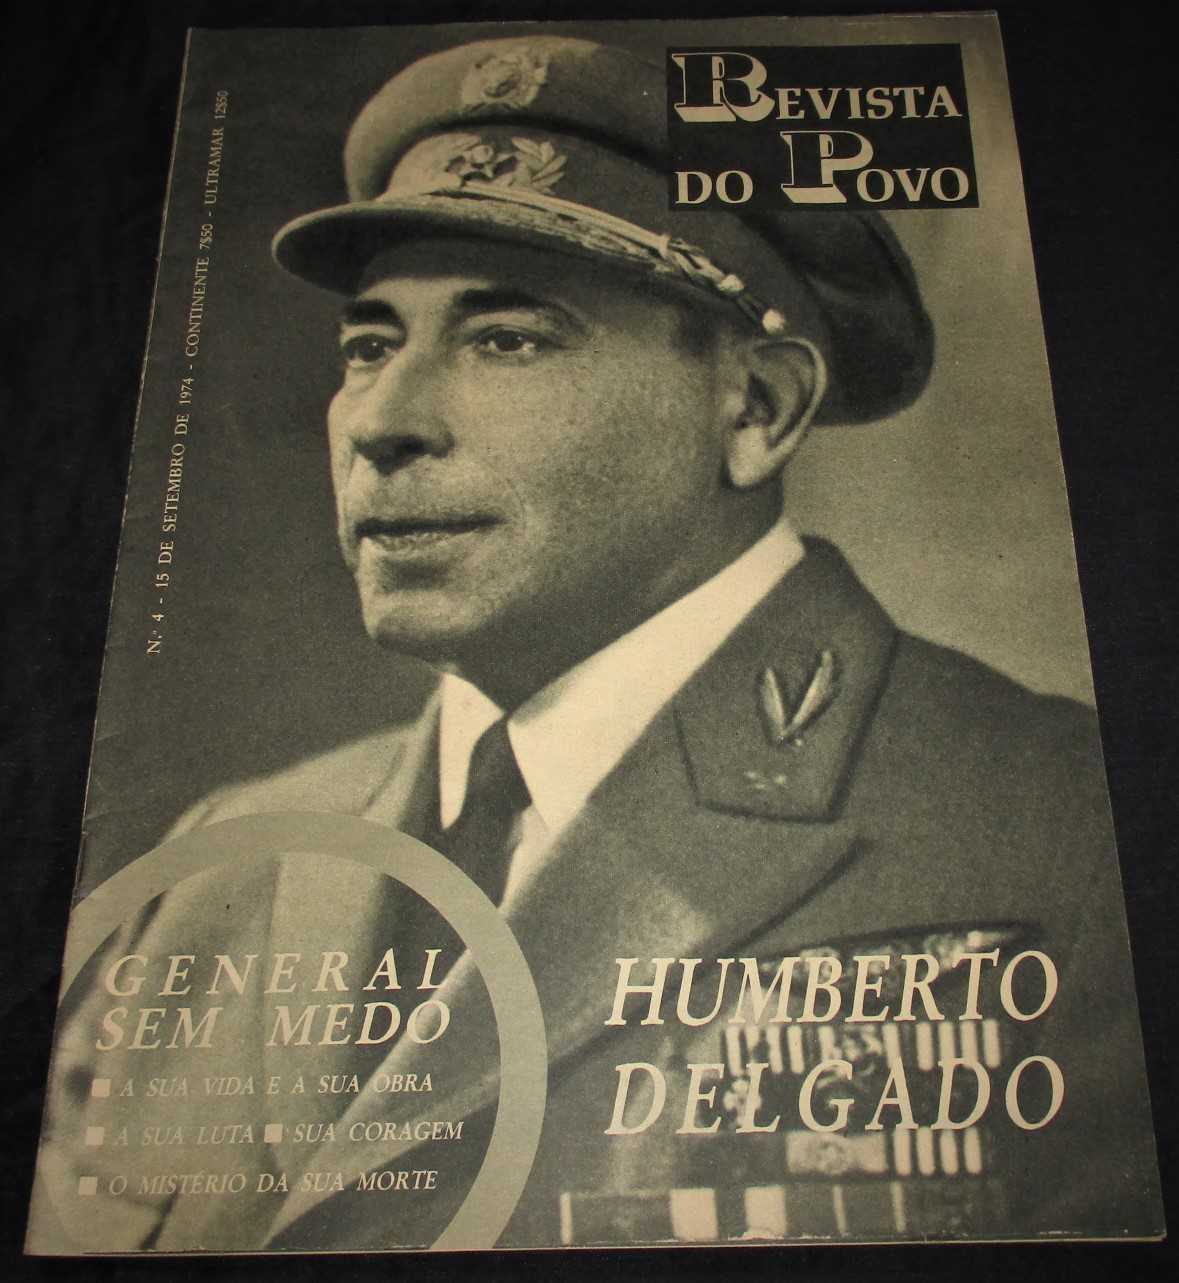 Revista do Povo Humberto Delgado General sem medo